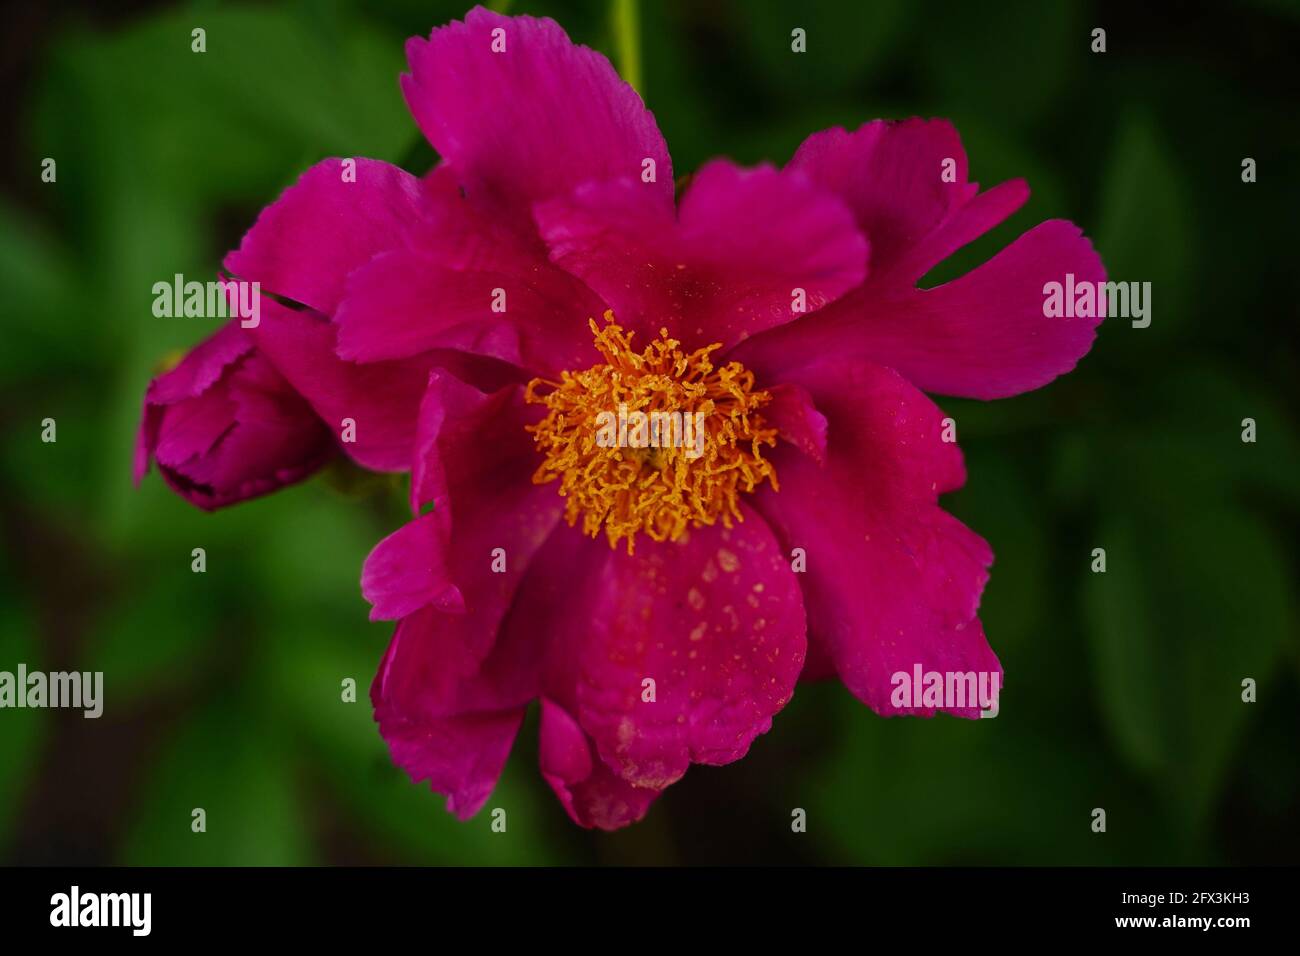 Rosa Peony flor de cerca, enfoque selectivo Foto de stock